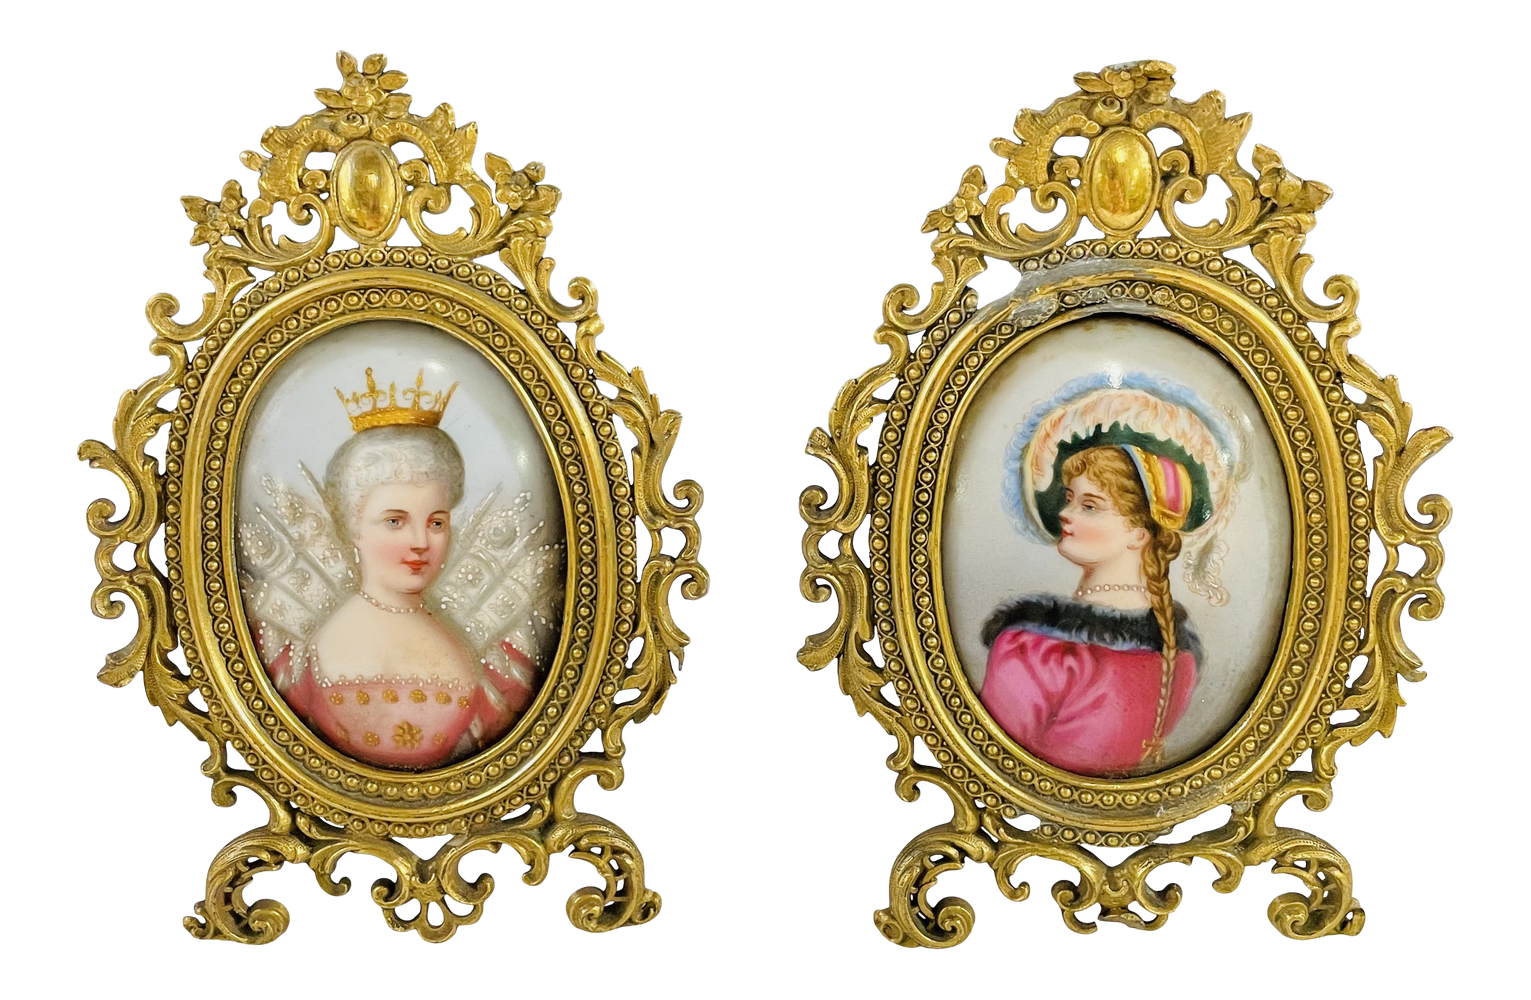 19th Century Porcelain Portrait Plaque in a Brass Frame, a Pair